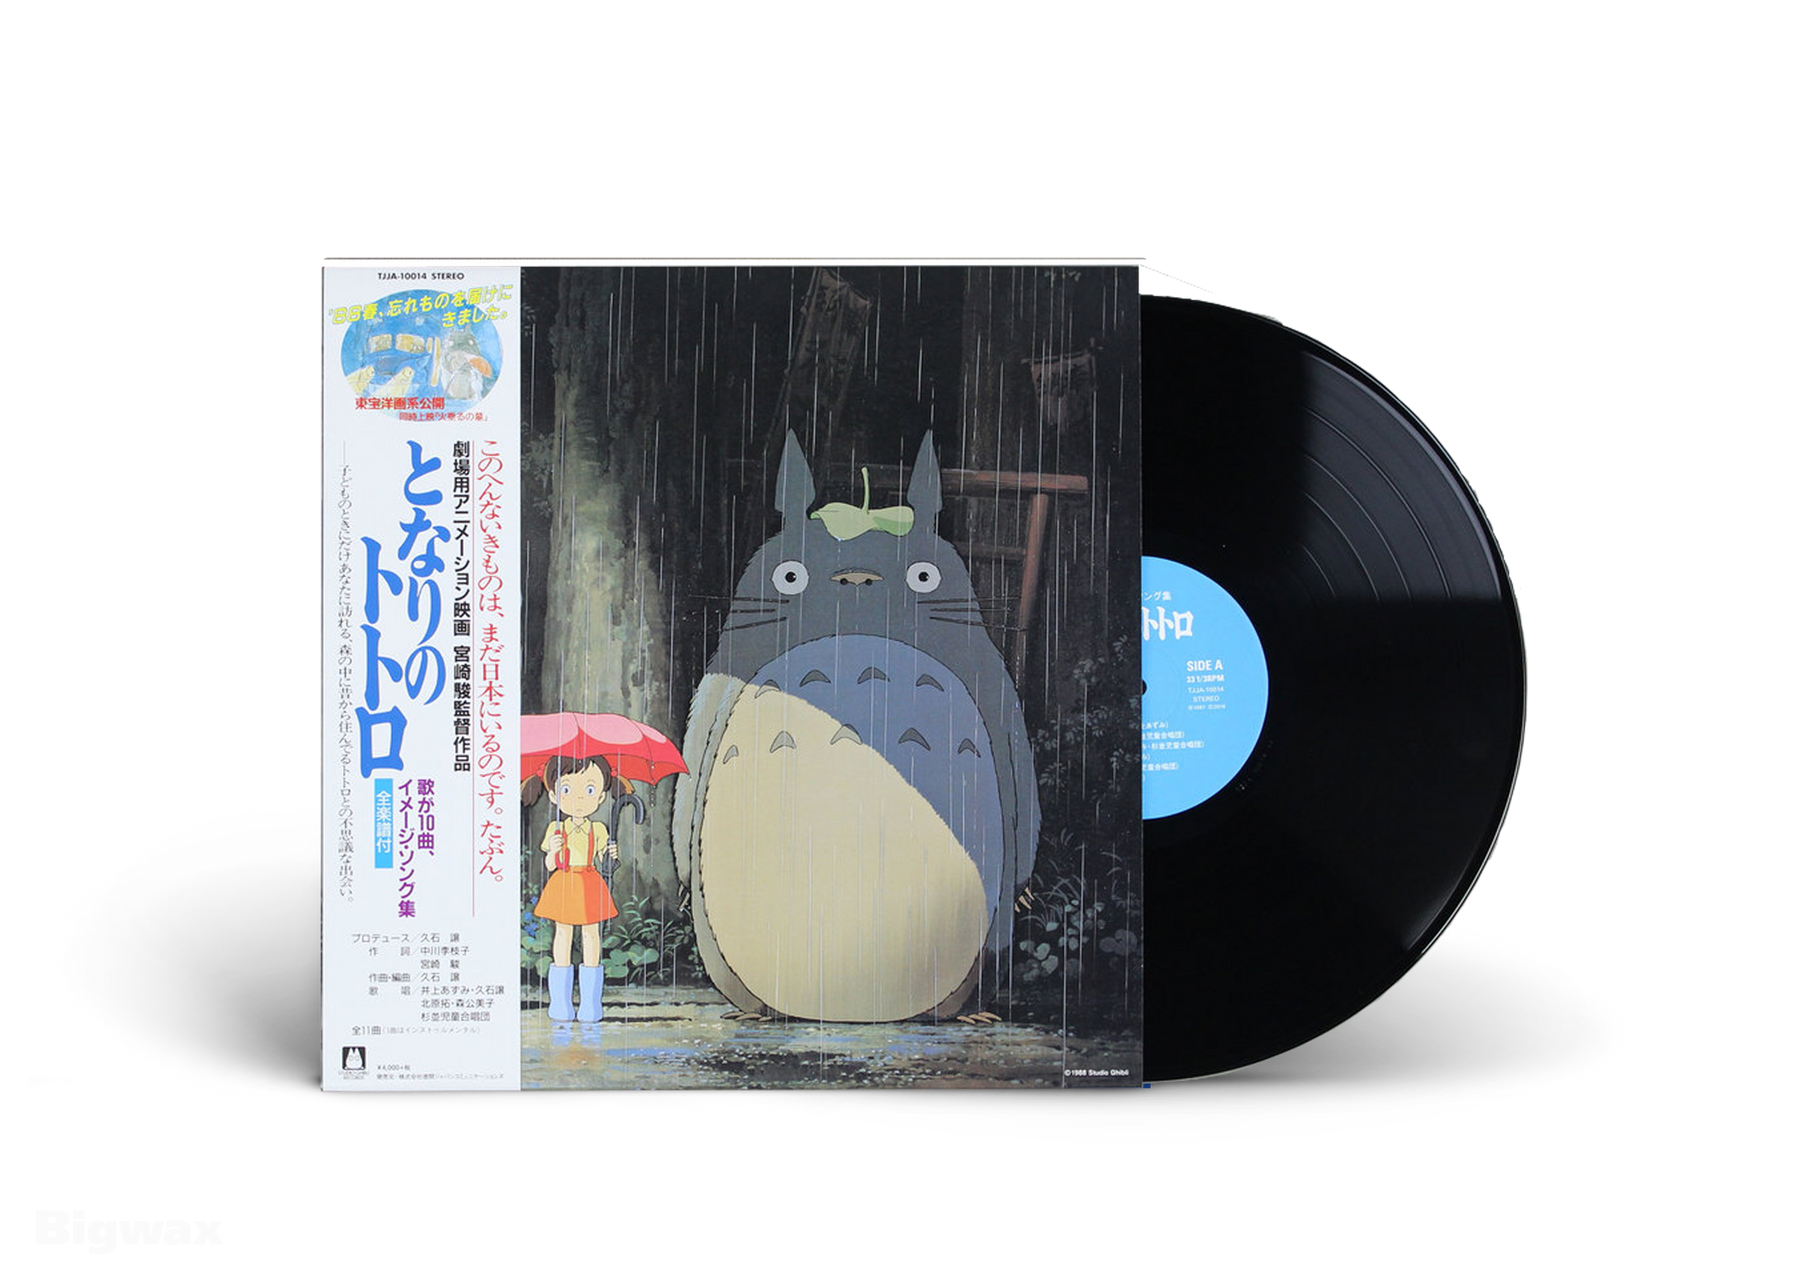 Mon Voison Totoro (Orchestra Stories) - Joe hisaishi - BIGWAX DISTRIBUTION  - Album Vinyle - Potemkine PARIS